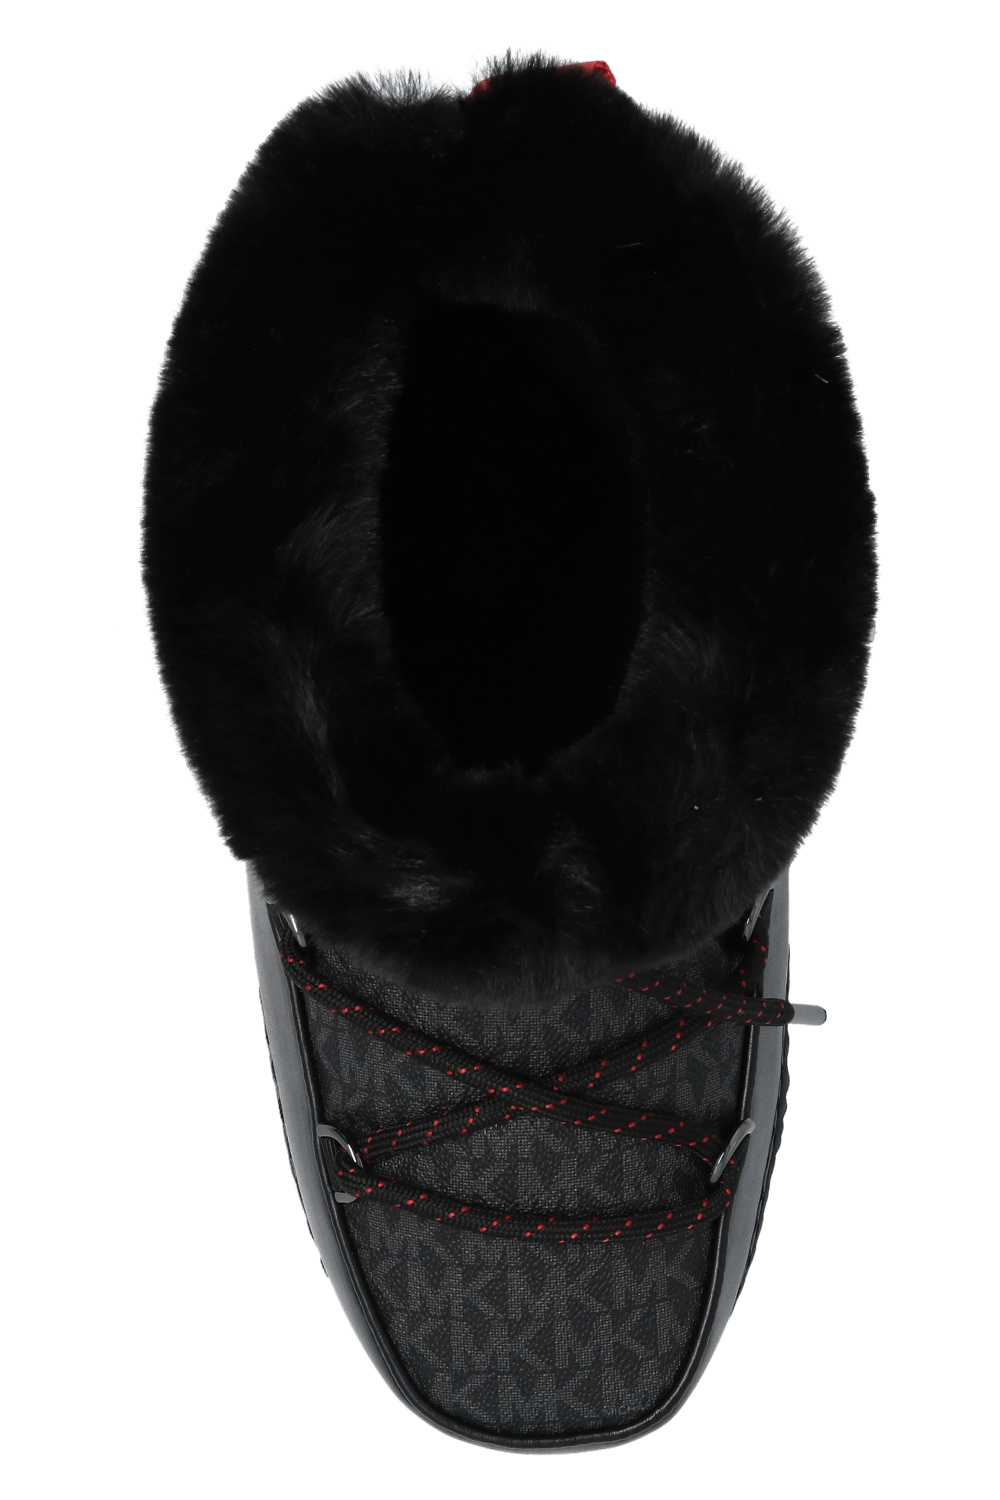 Michael Michael Kors 'Zelda' snow boots | Women's Shoes | Vitkac